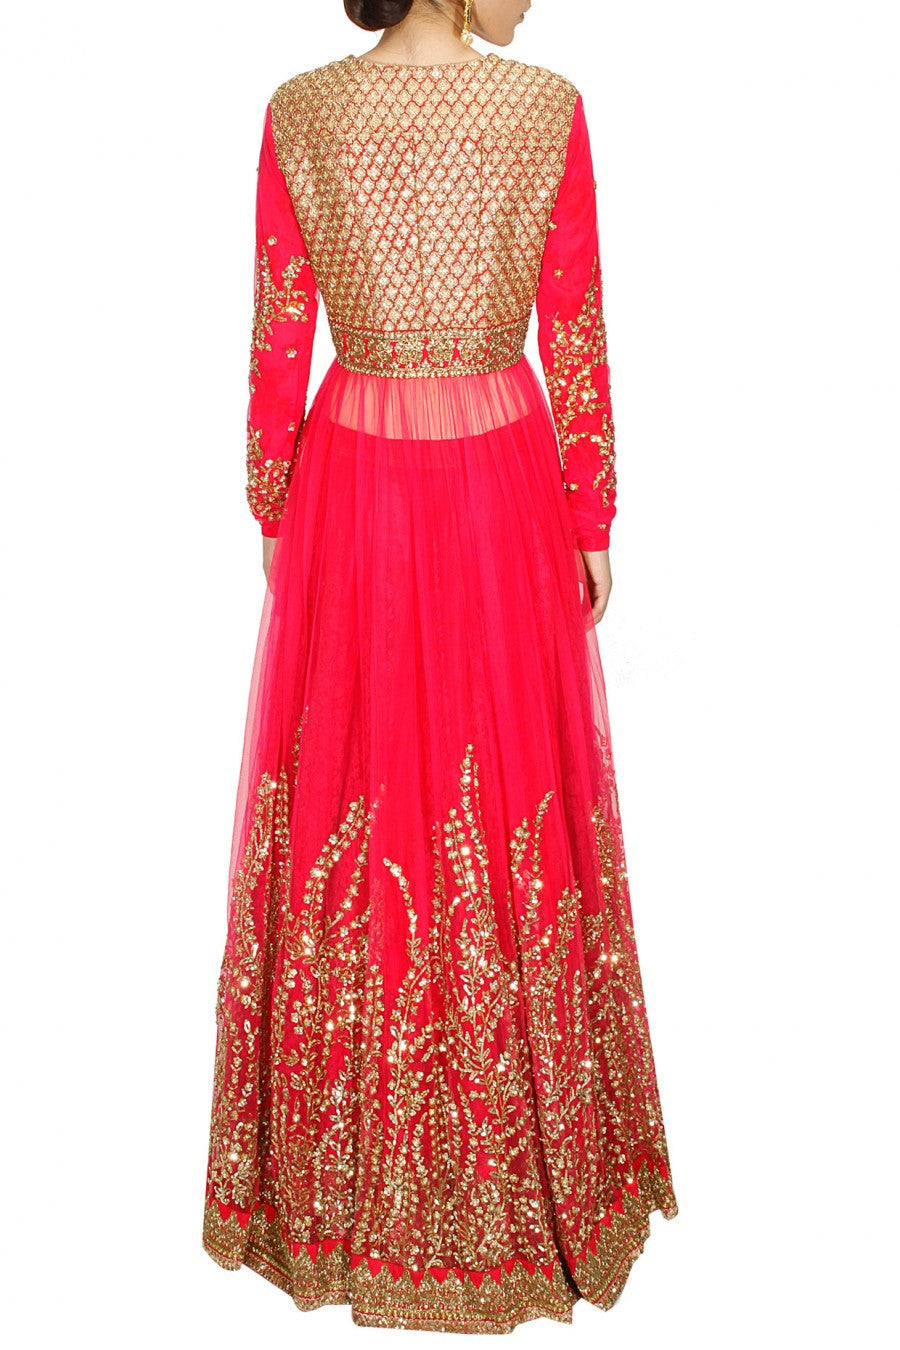 Garnet Red Color Bridal Lehenga – Panache Haute Couture